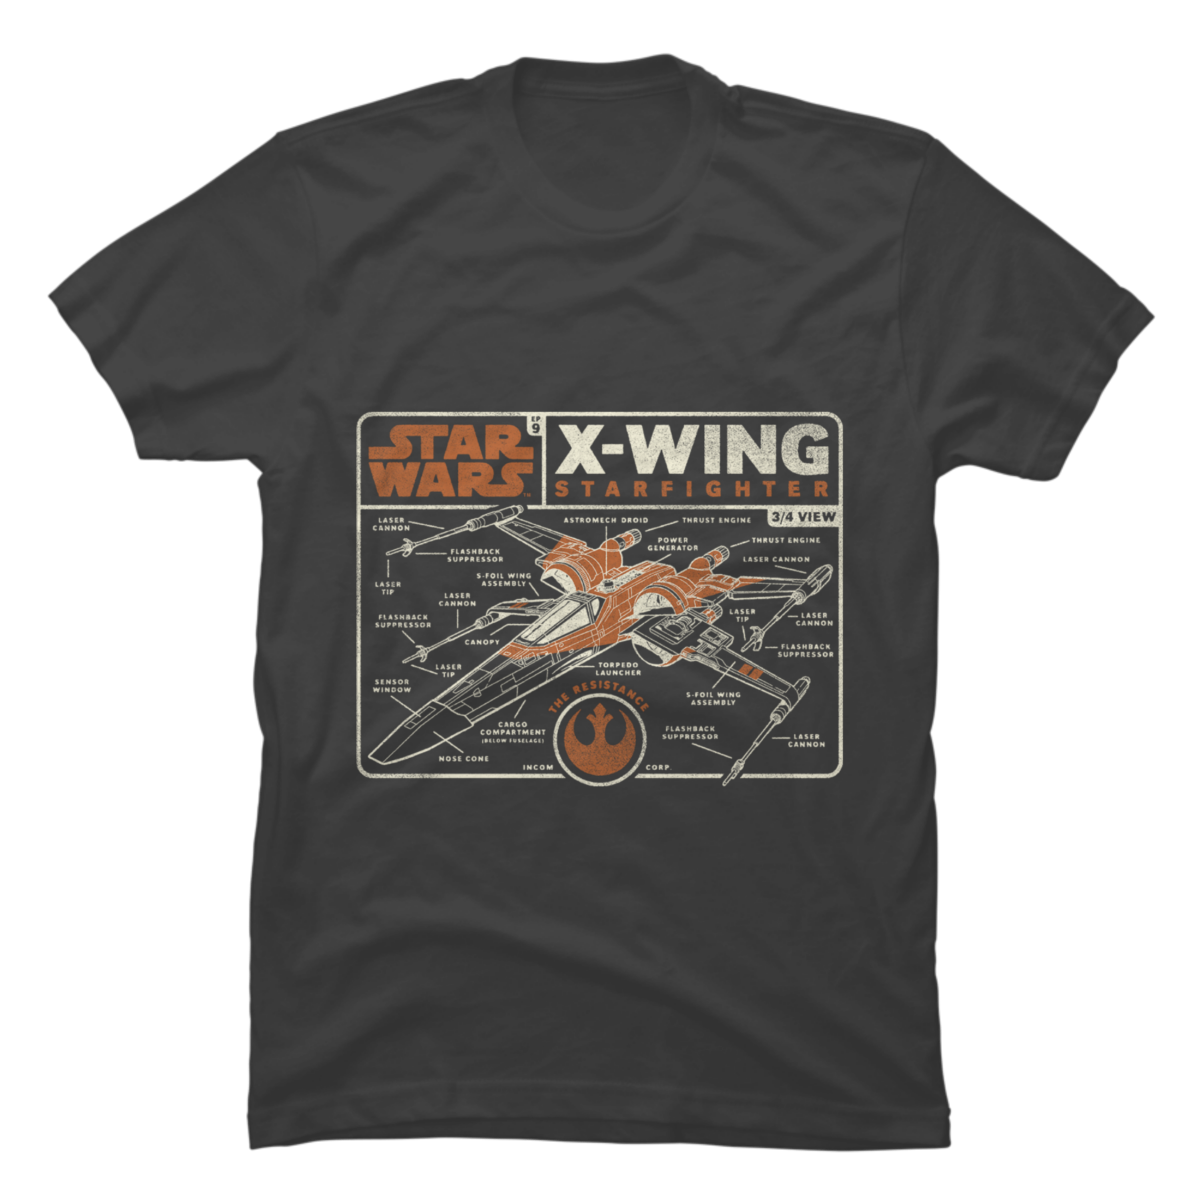 star wars x wing shirt